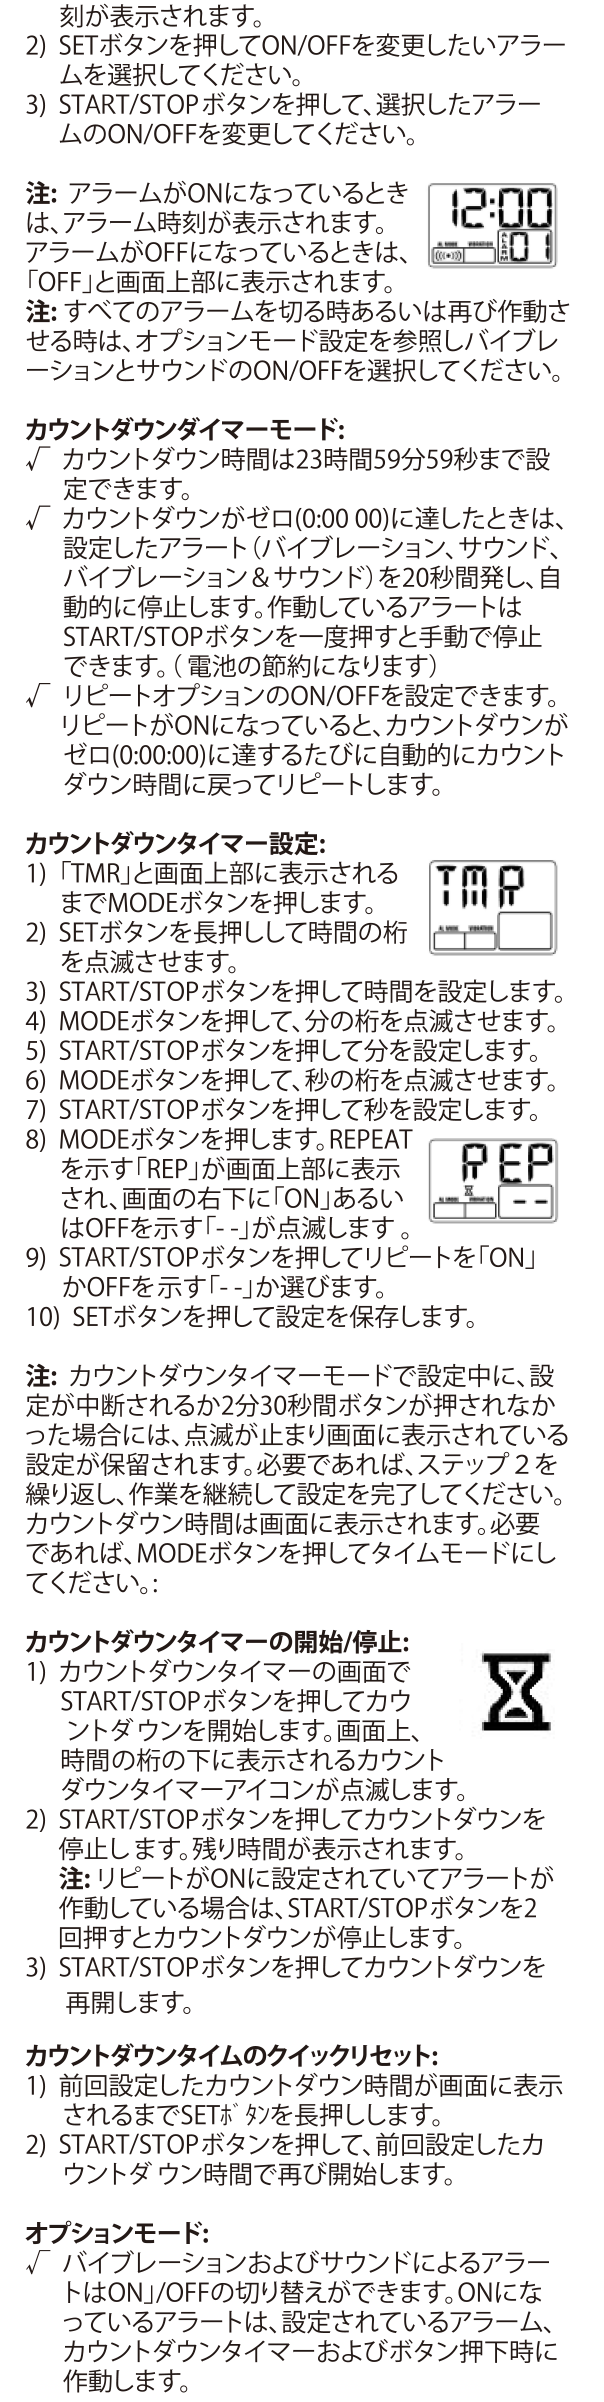 vibralite-mini-japanese-instruction-manual-page-3